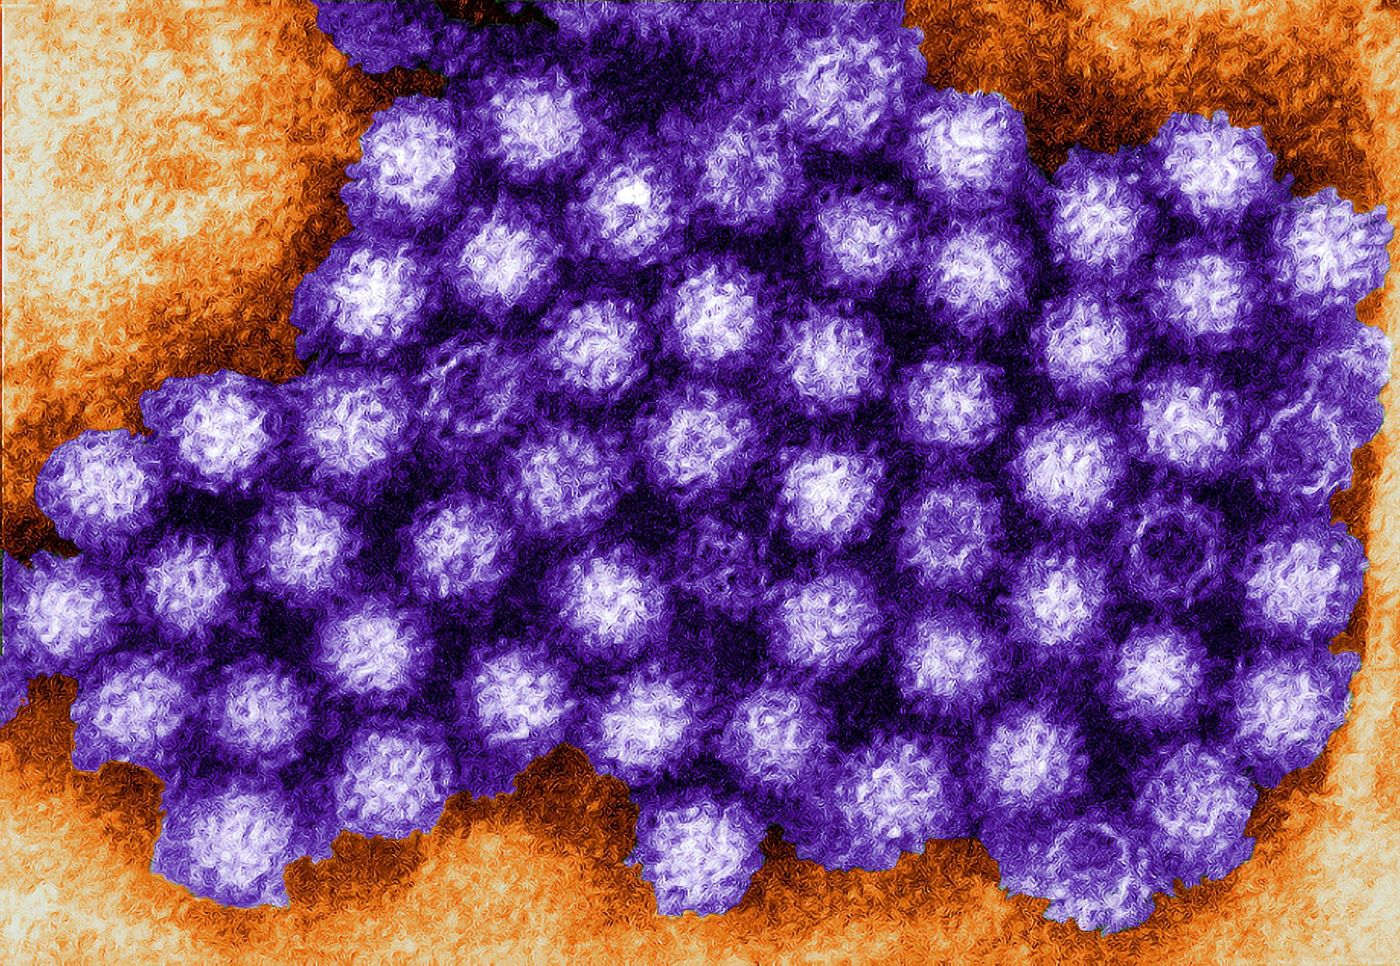 Norovirus / Credit: public-domain-image.com